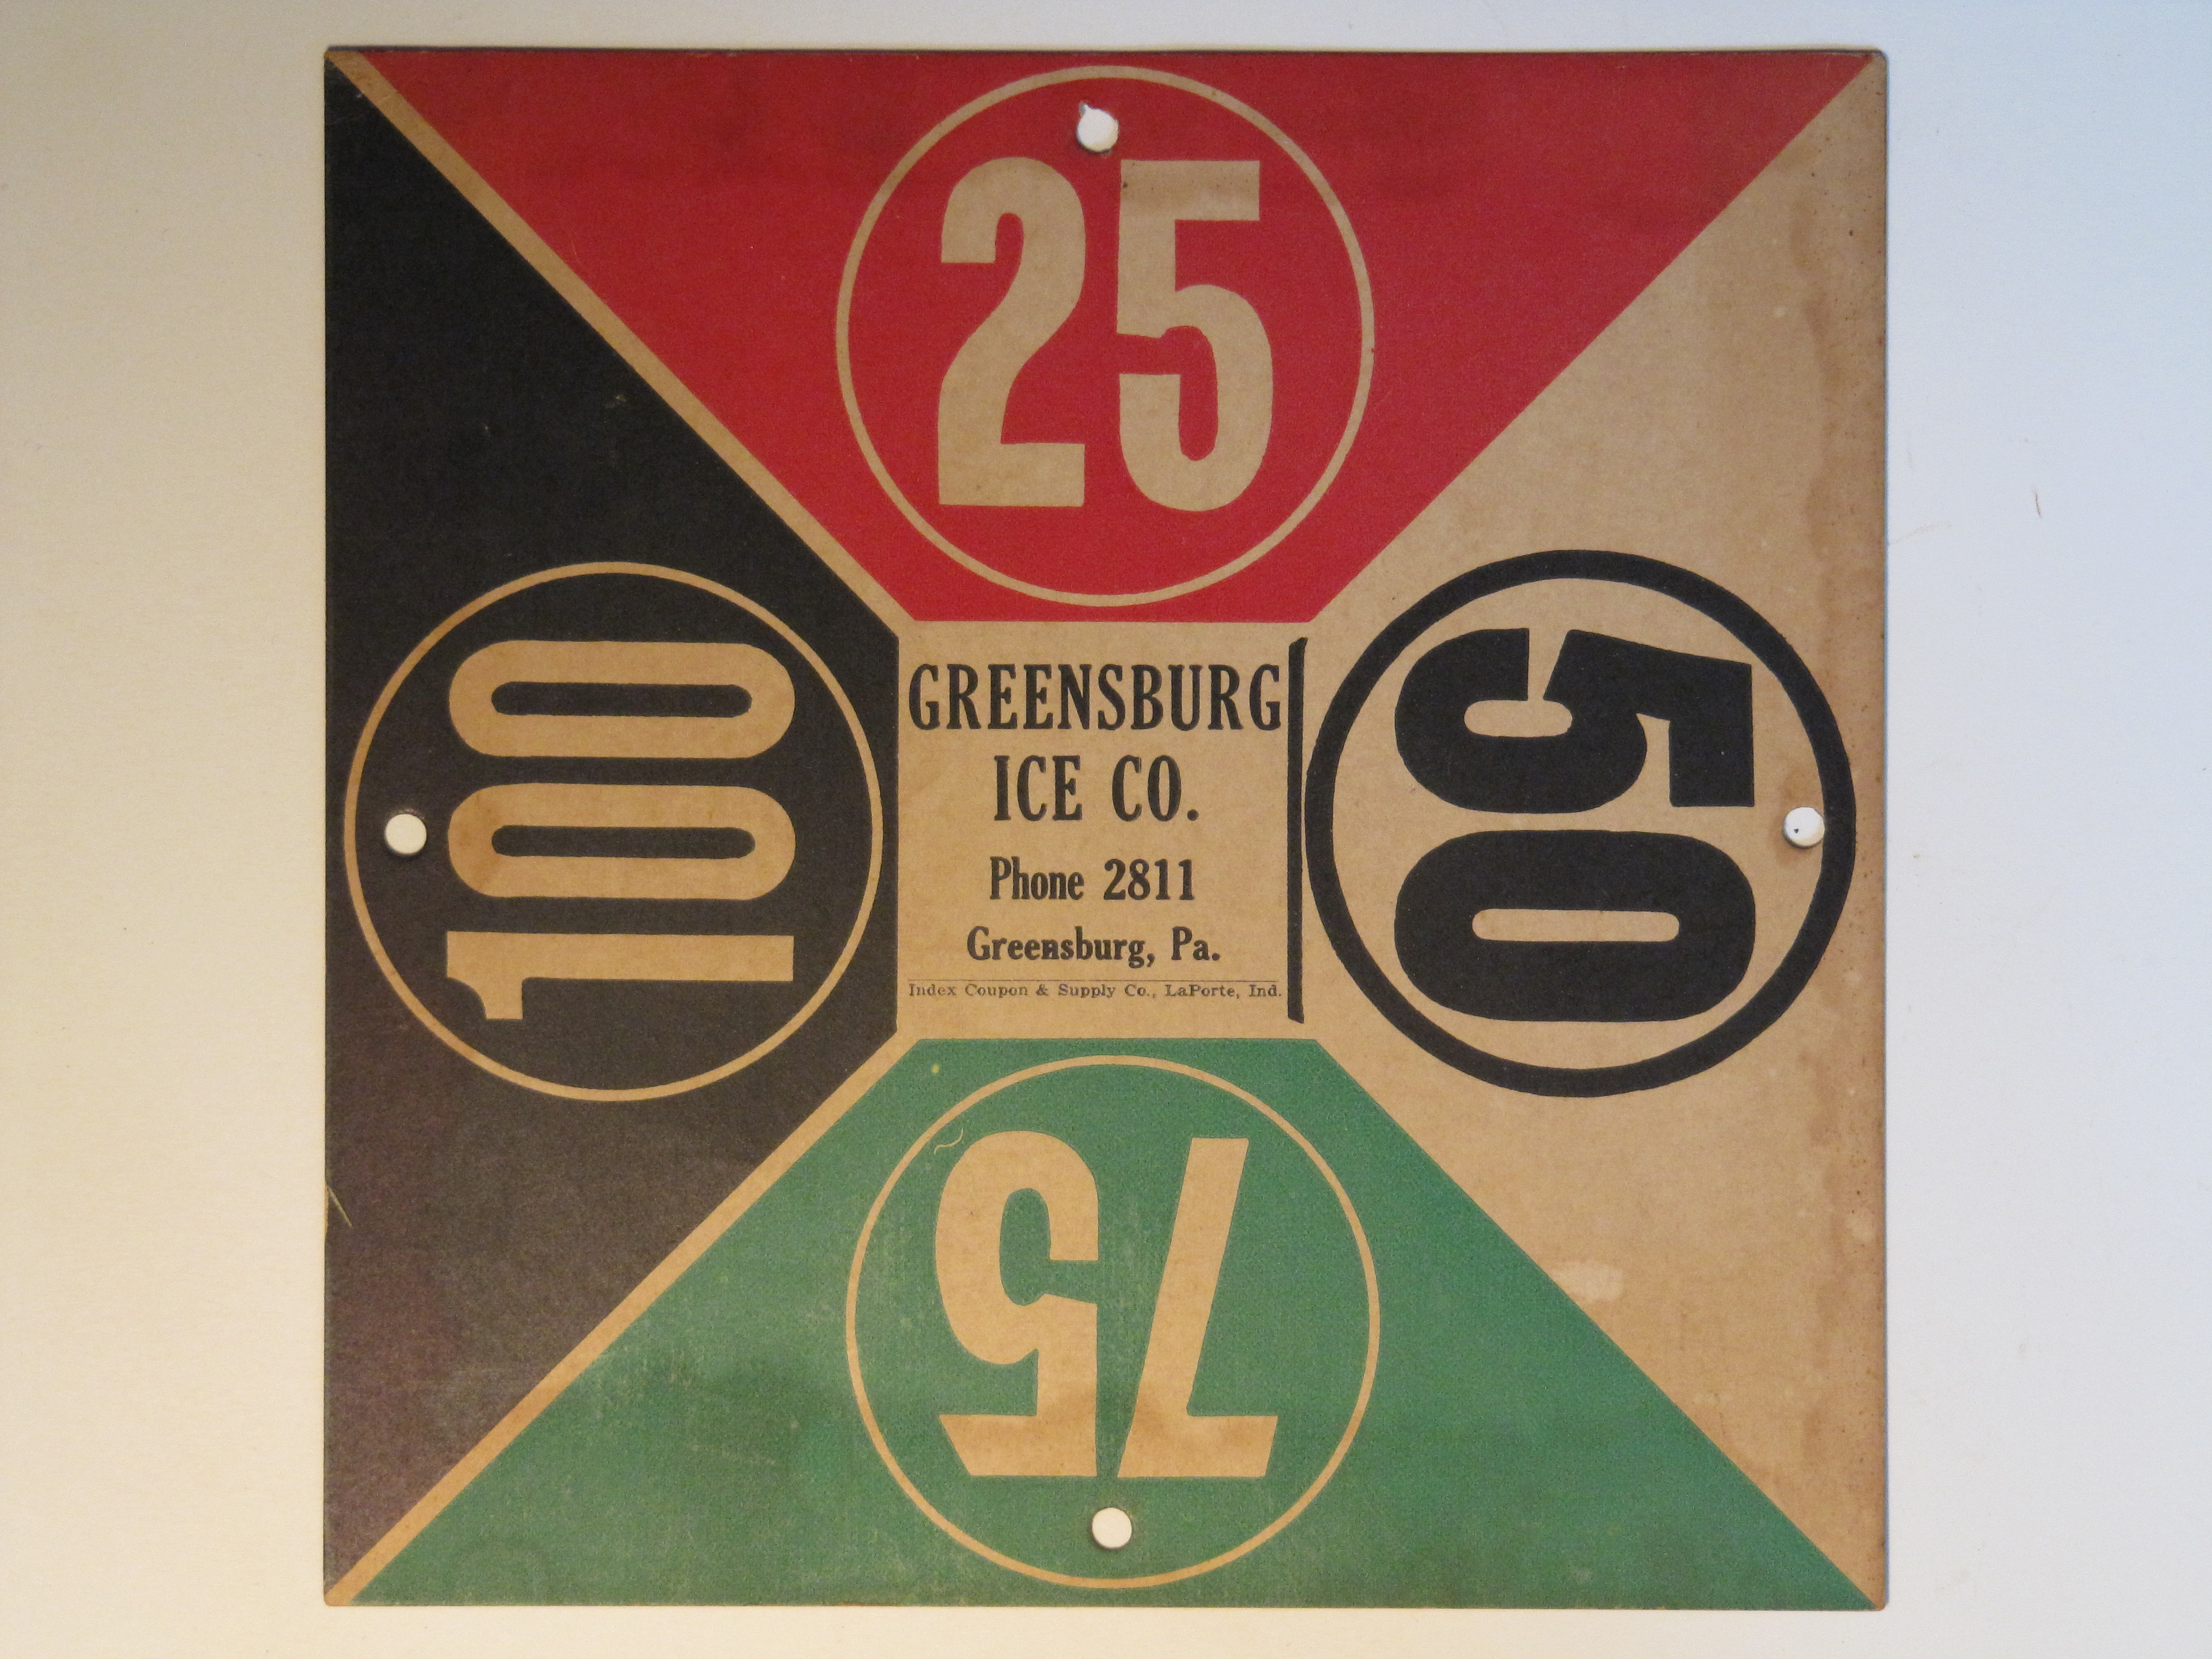 Greensburg Ice Co.